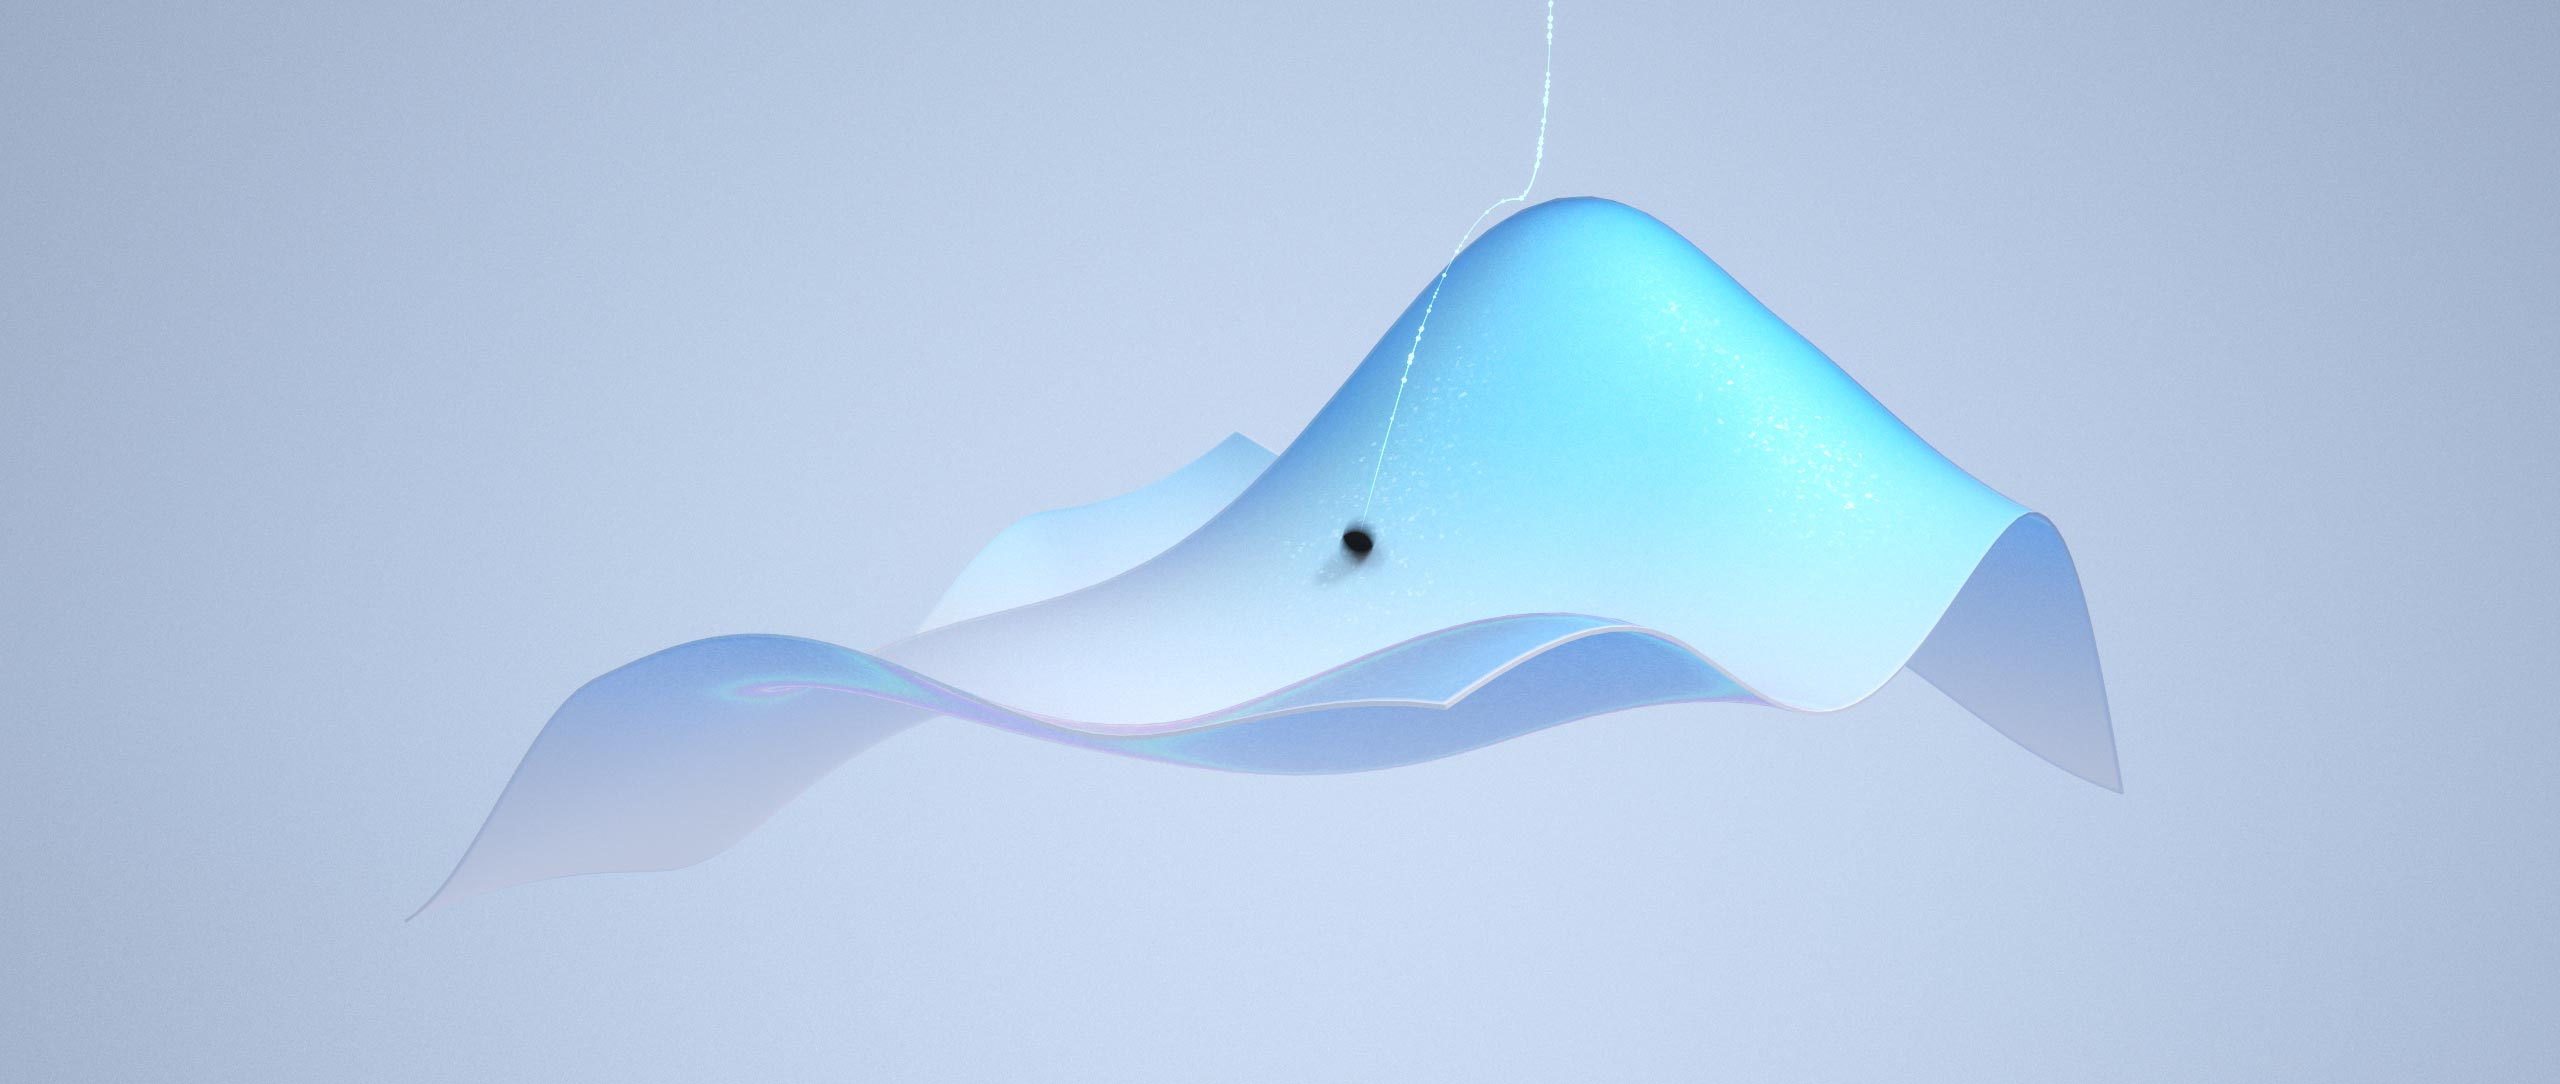 3D art: light blue, abstract wave-like form